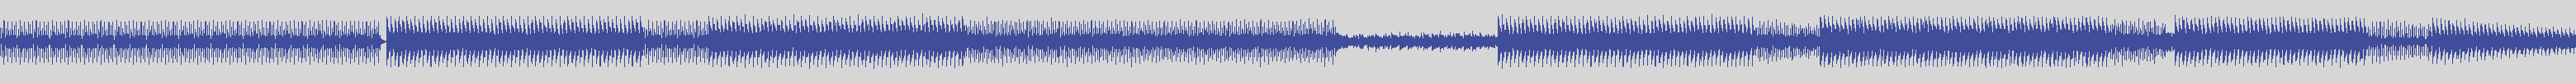 nf_boyz_records [NFY089] Jamie Sansone - Litorale [Original Mix] audio wave form